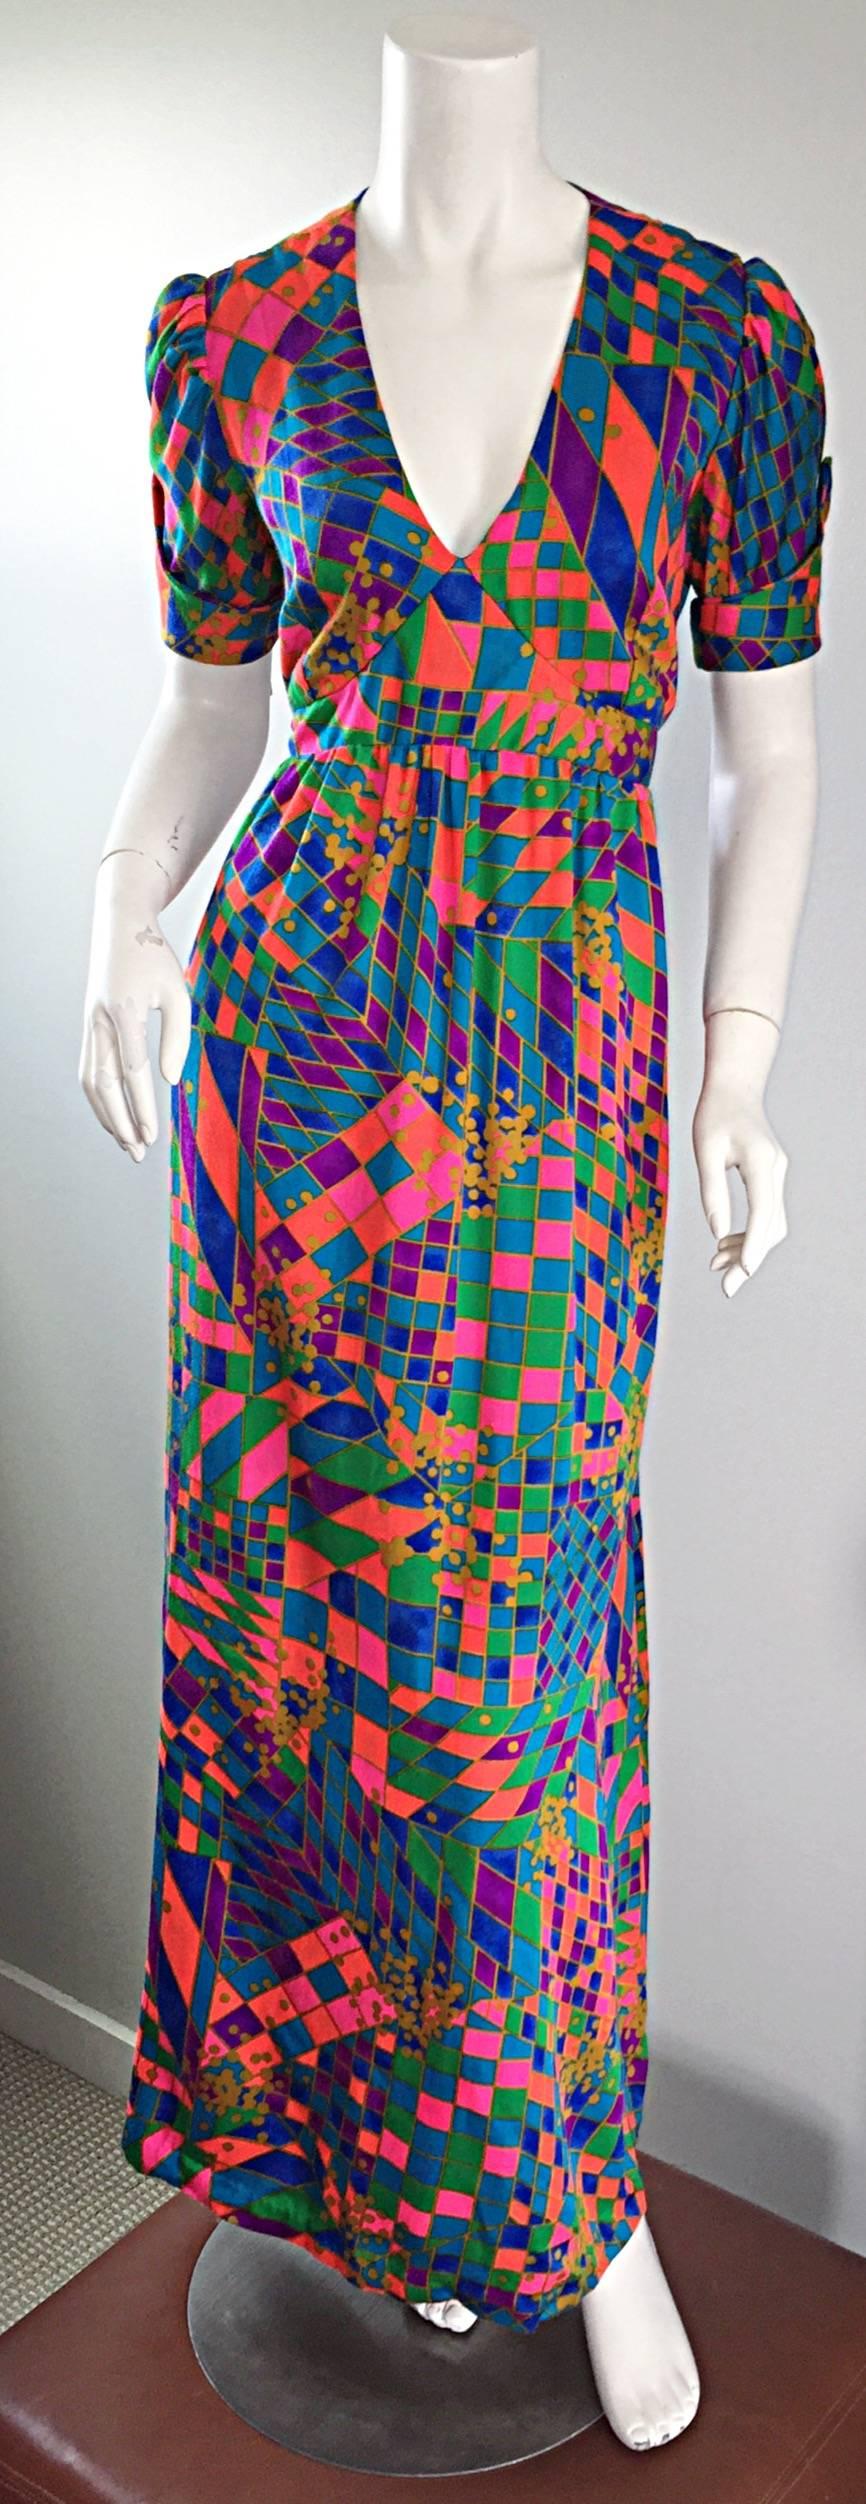 Rare 1970s ' Dear ' Designer Colorful Abstract Geometric Op - Art 70s Maxi Dress 4